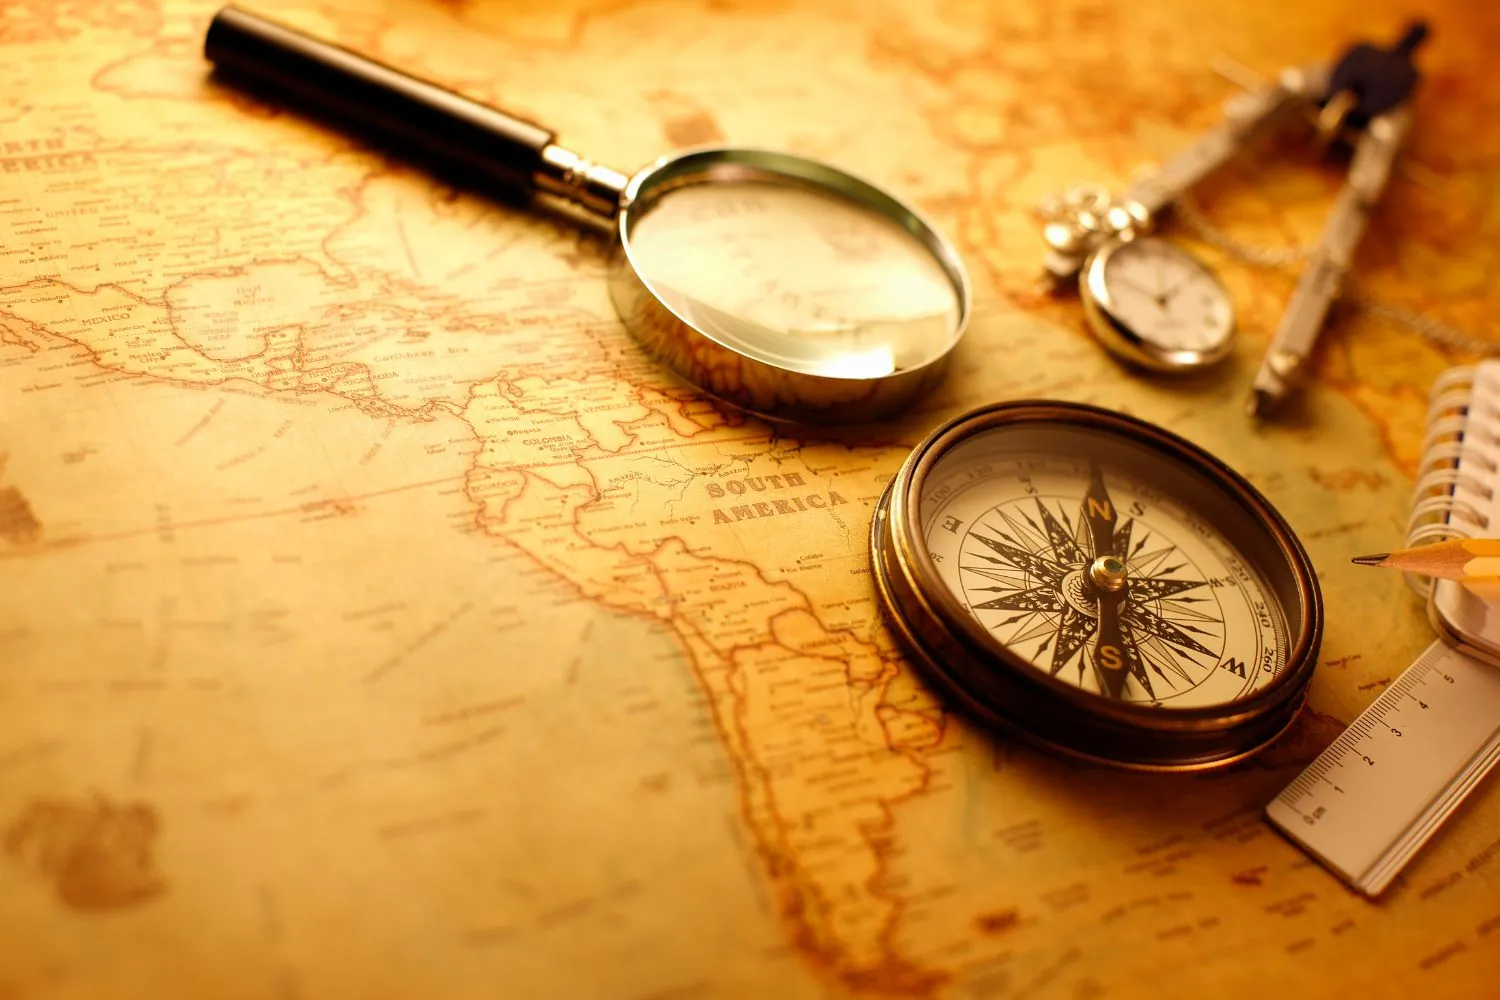 The Seville chronometer allowed precise maritime navigation